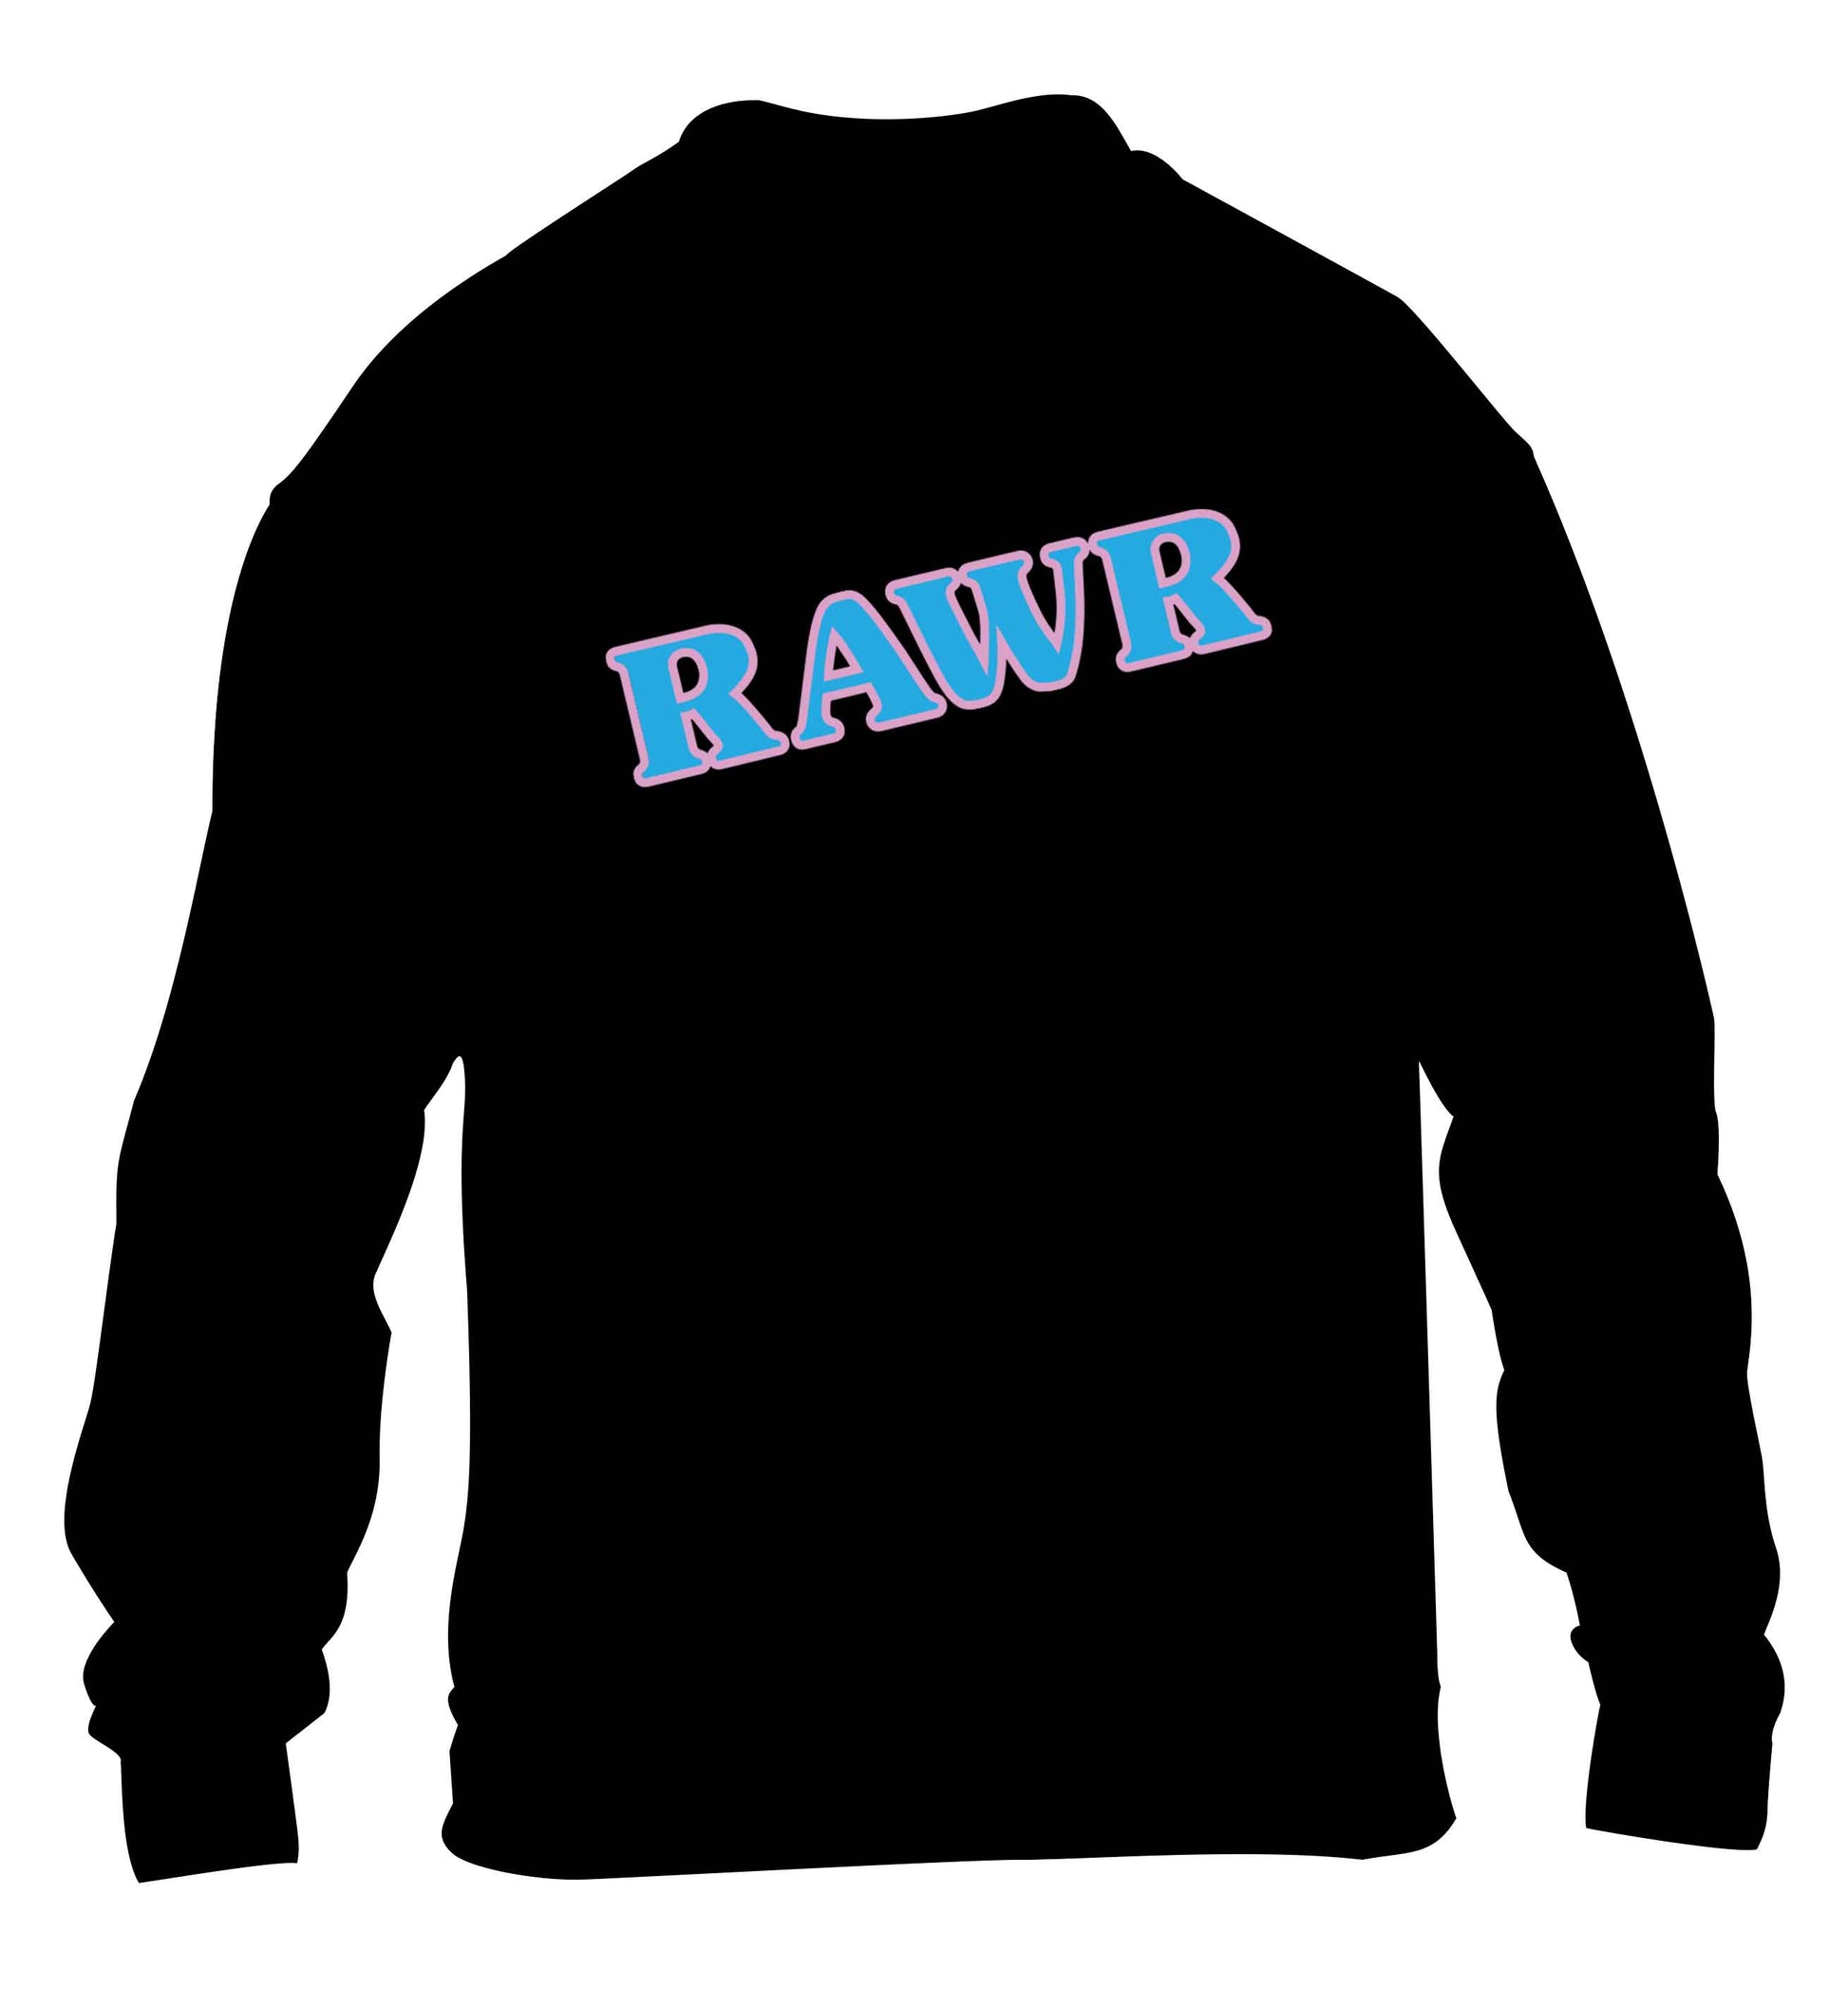 Rawr children's black sweater 12-13 Years